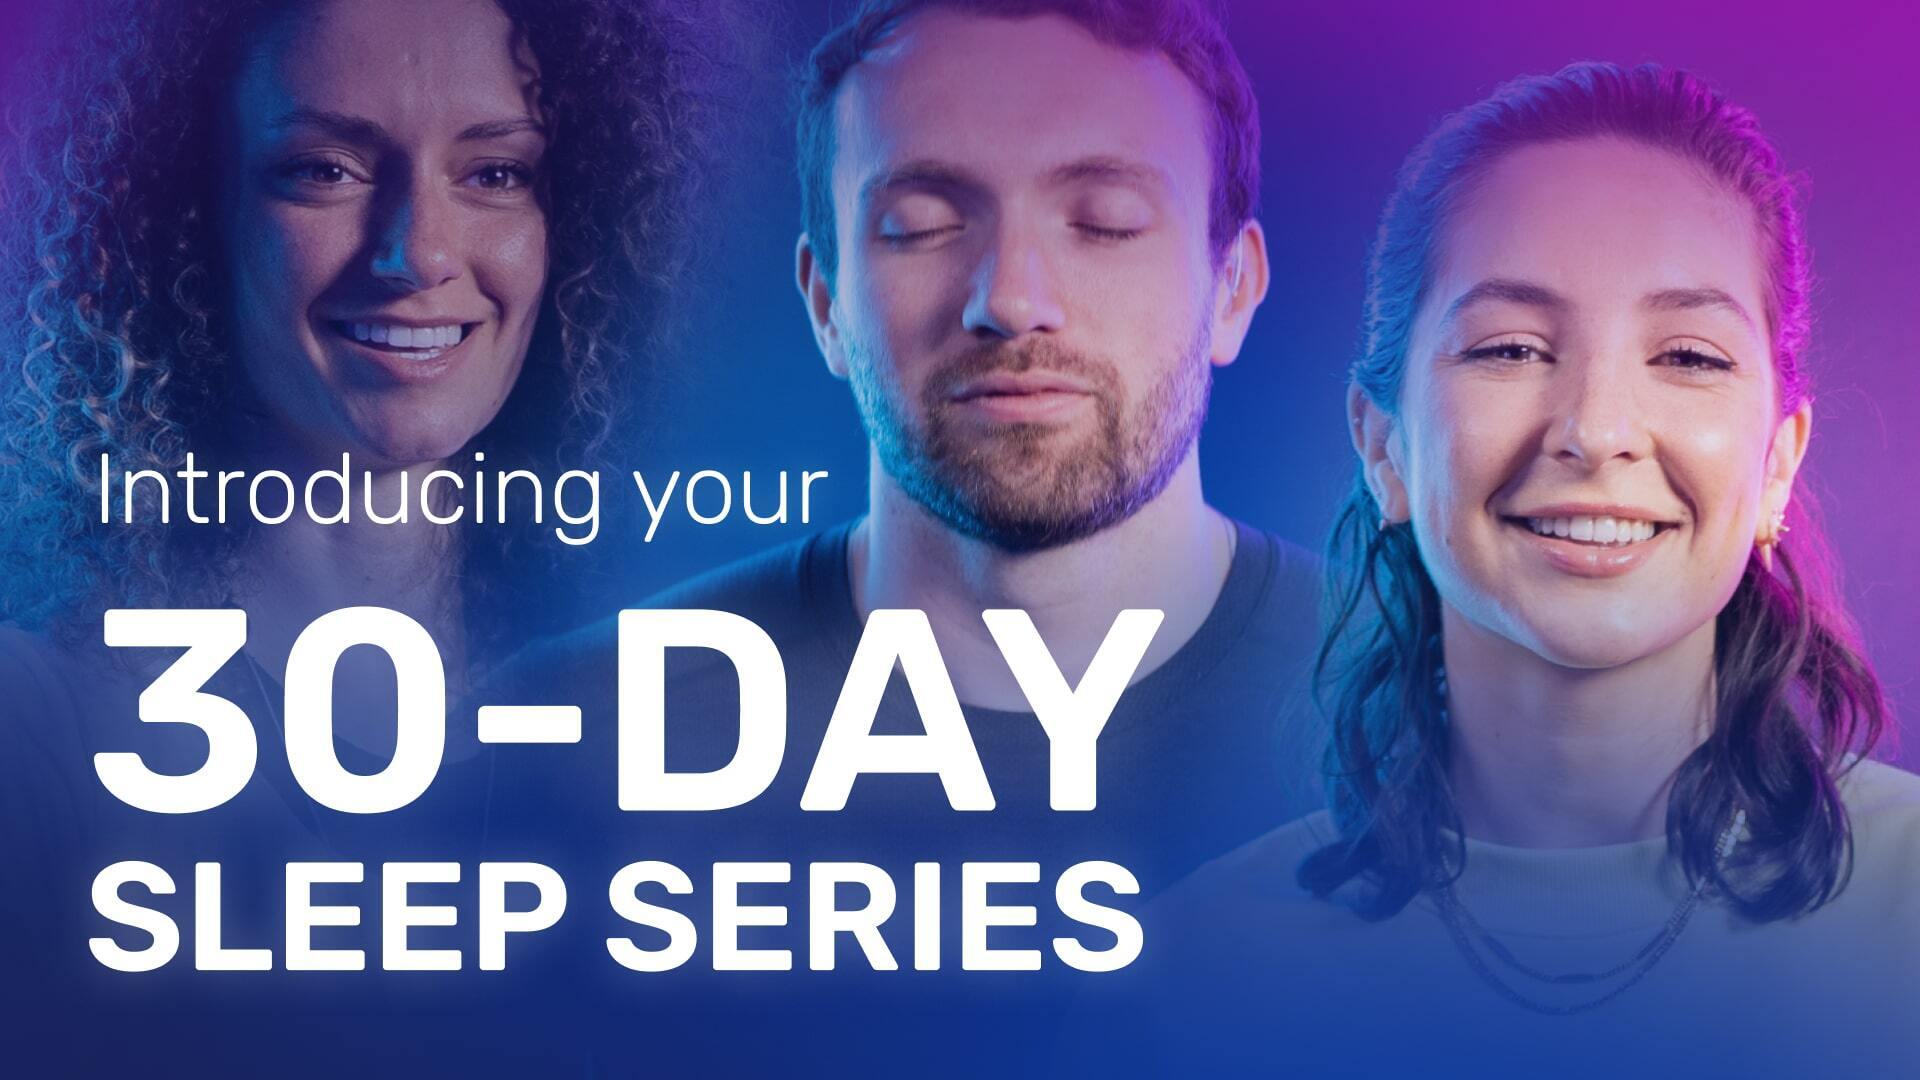 Improve your sleep in 30 days